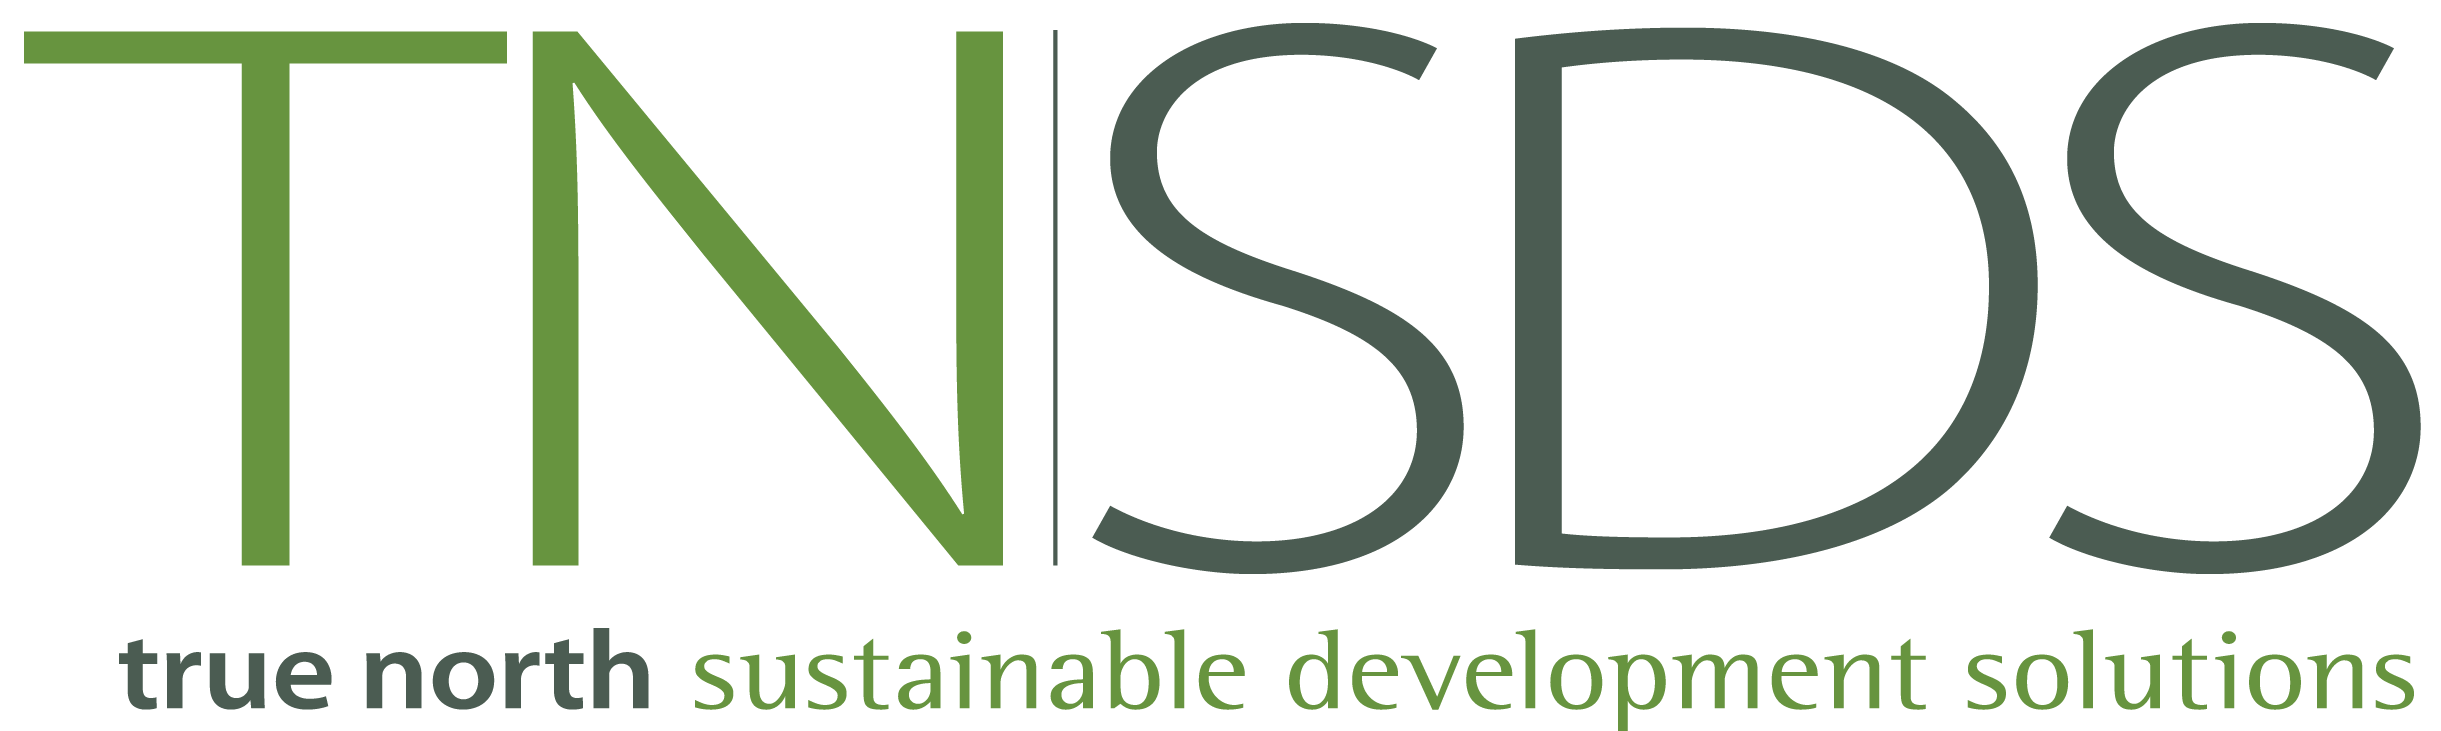 True North Sustainable Development Solutions